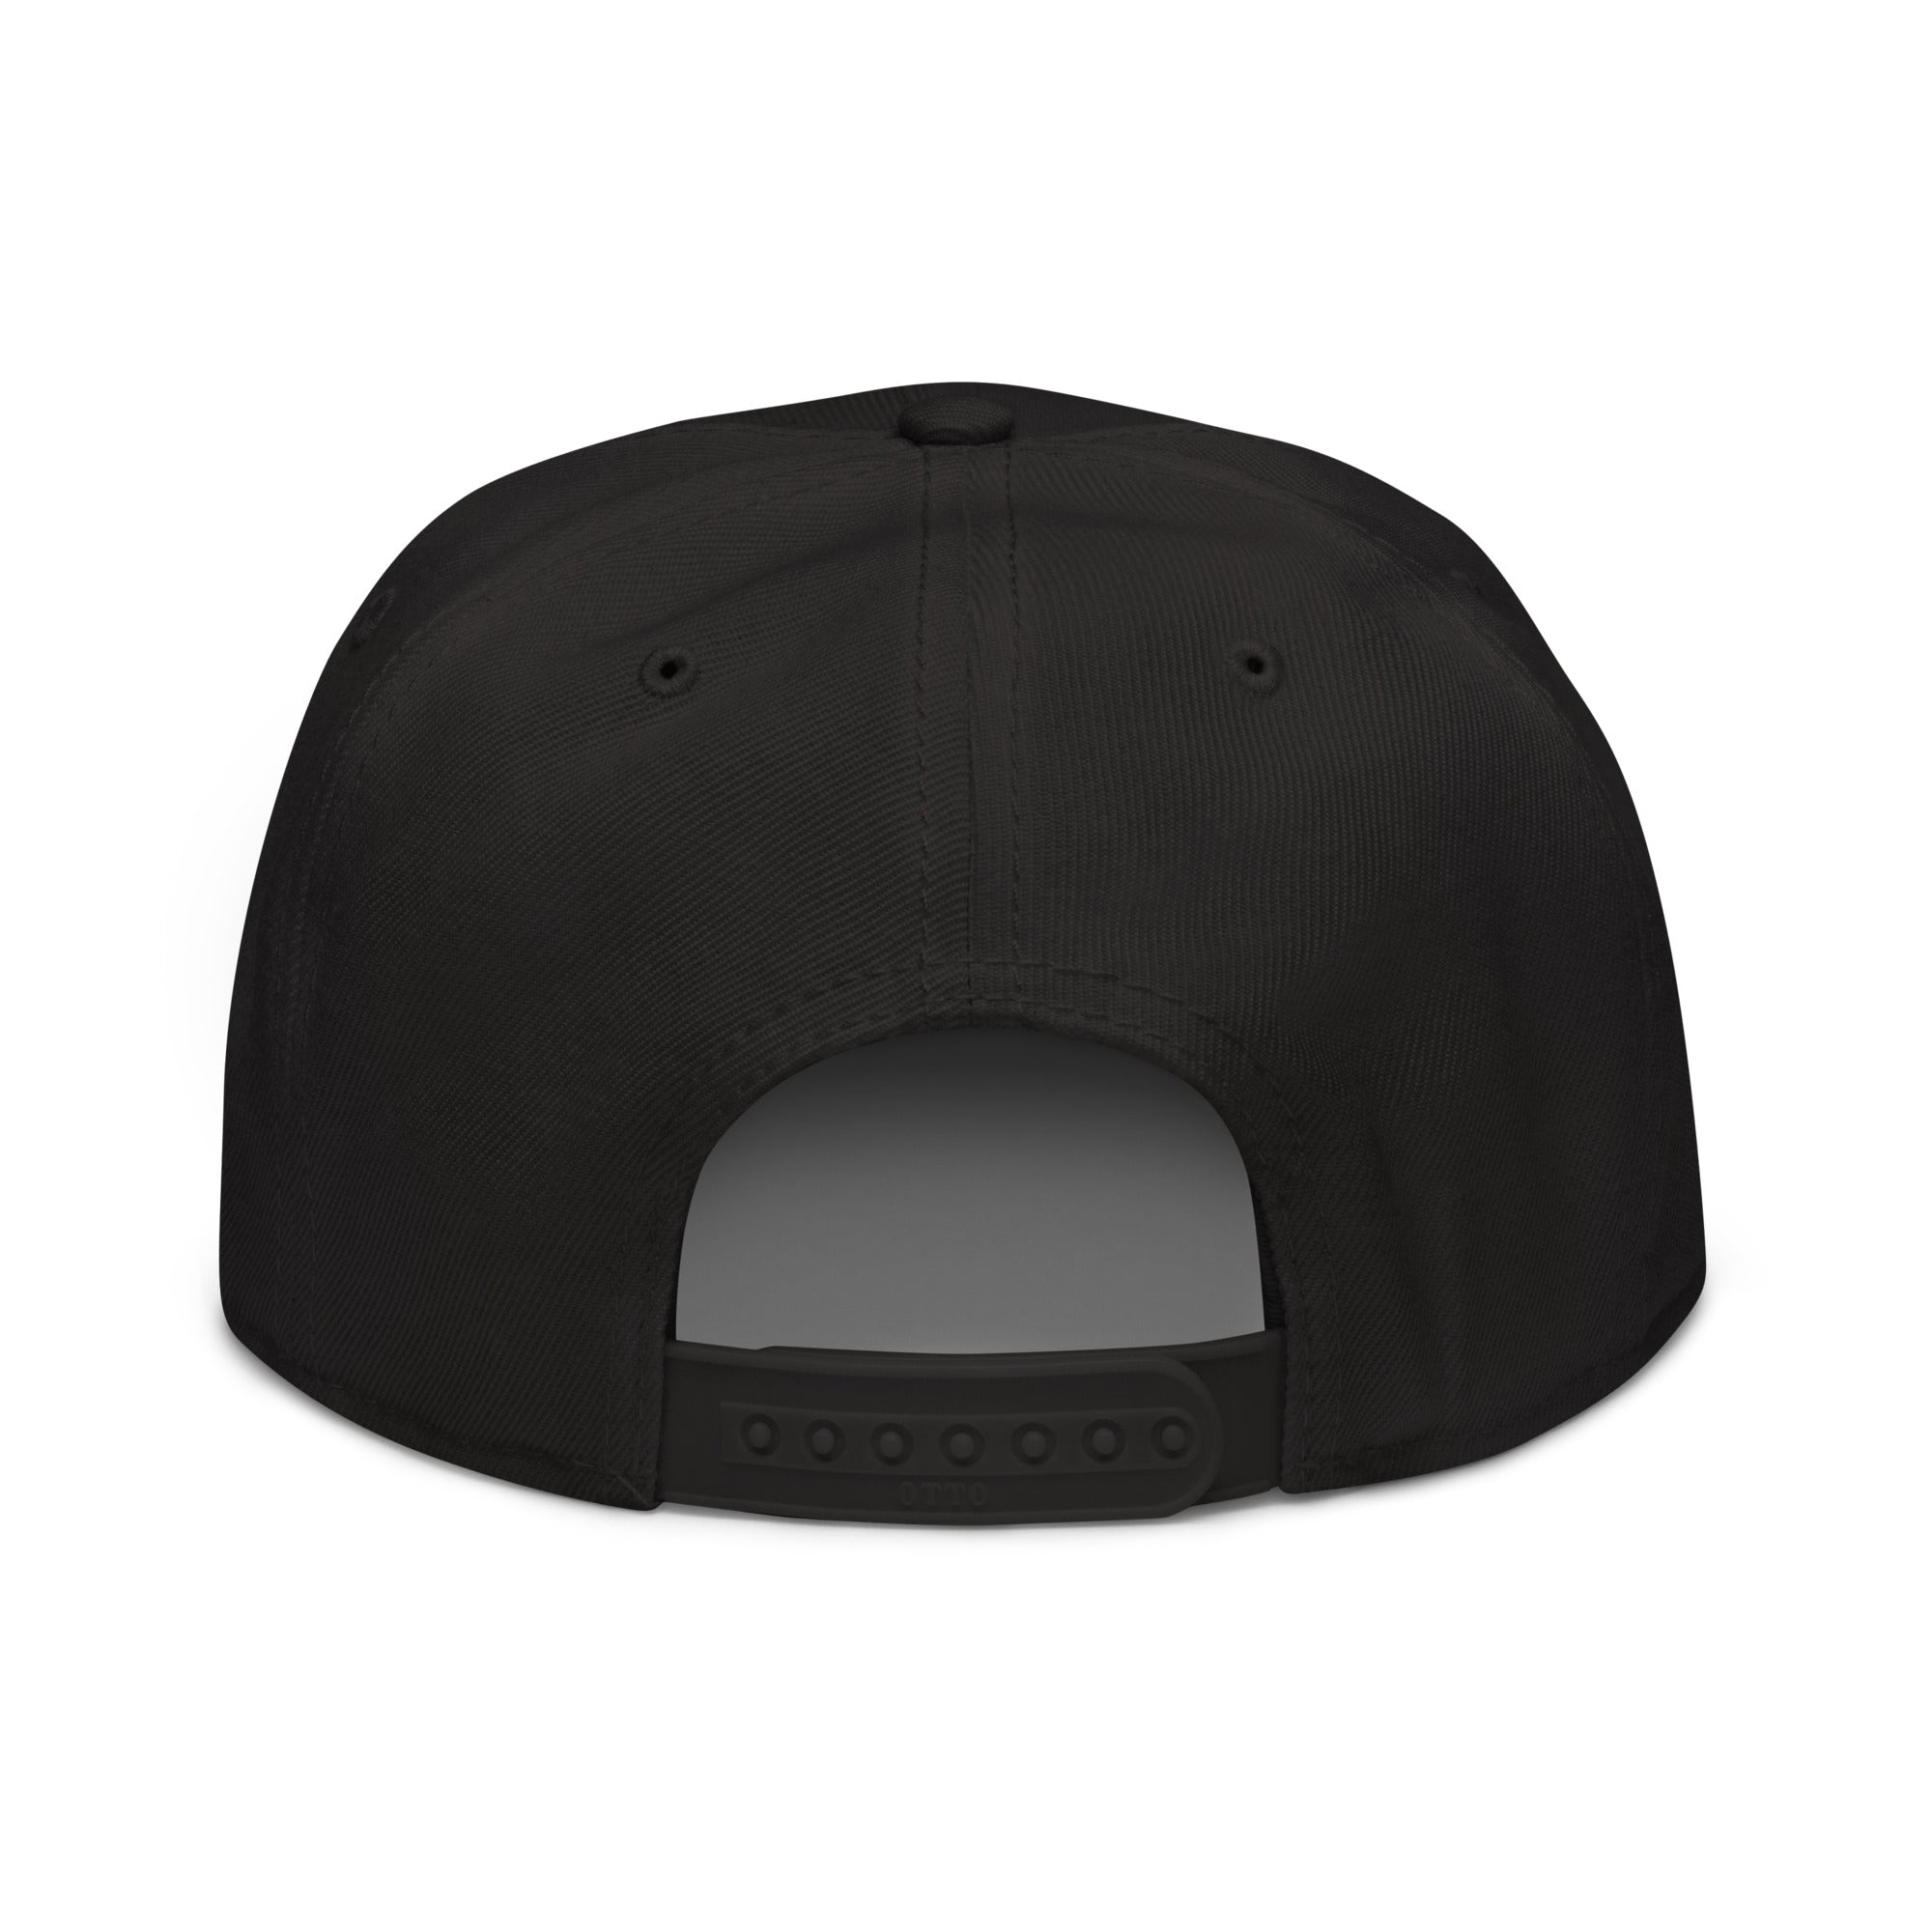 717 Crest Snapback Hat